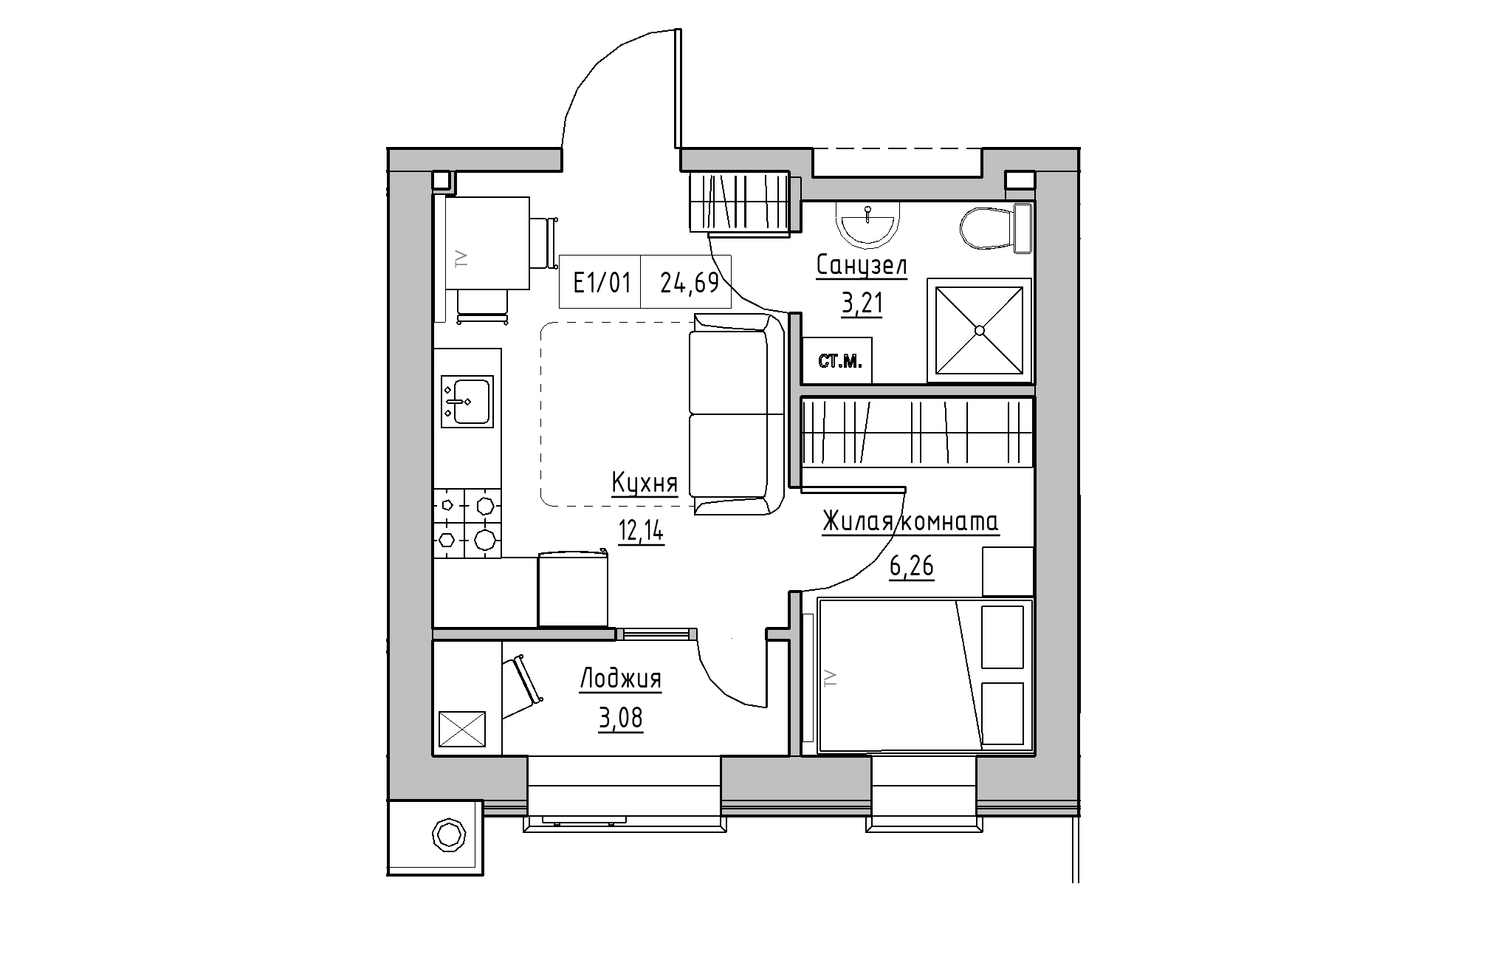 Planning 1-rm flats area 24.69m2, KS-013-04/0012.